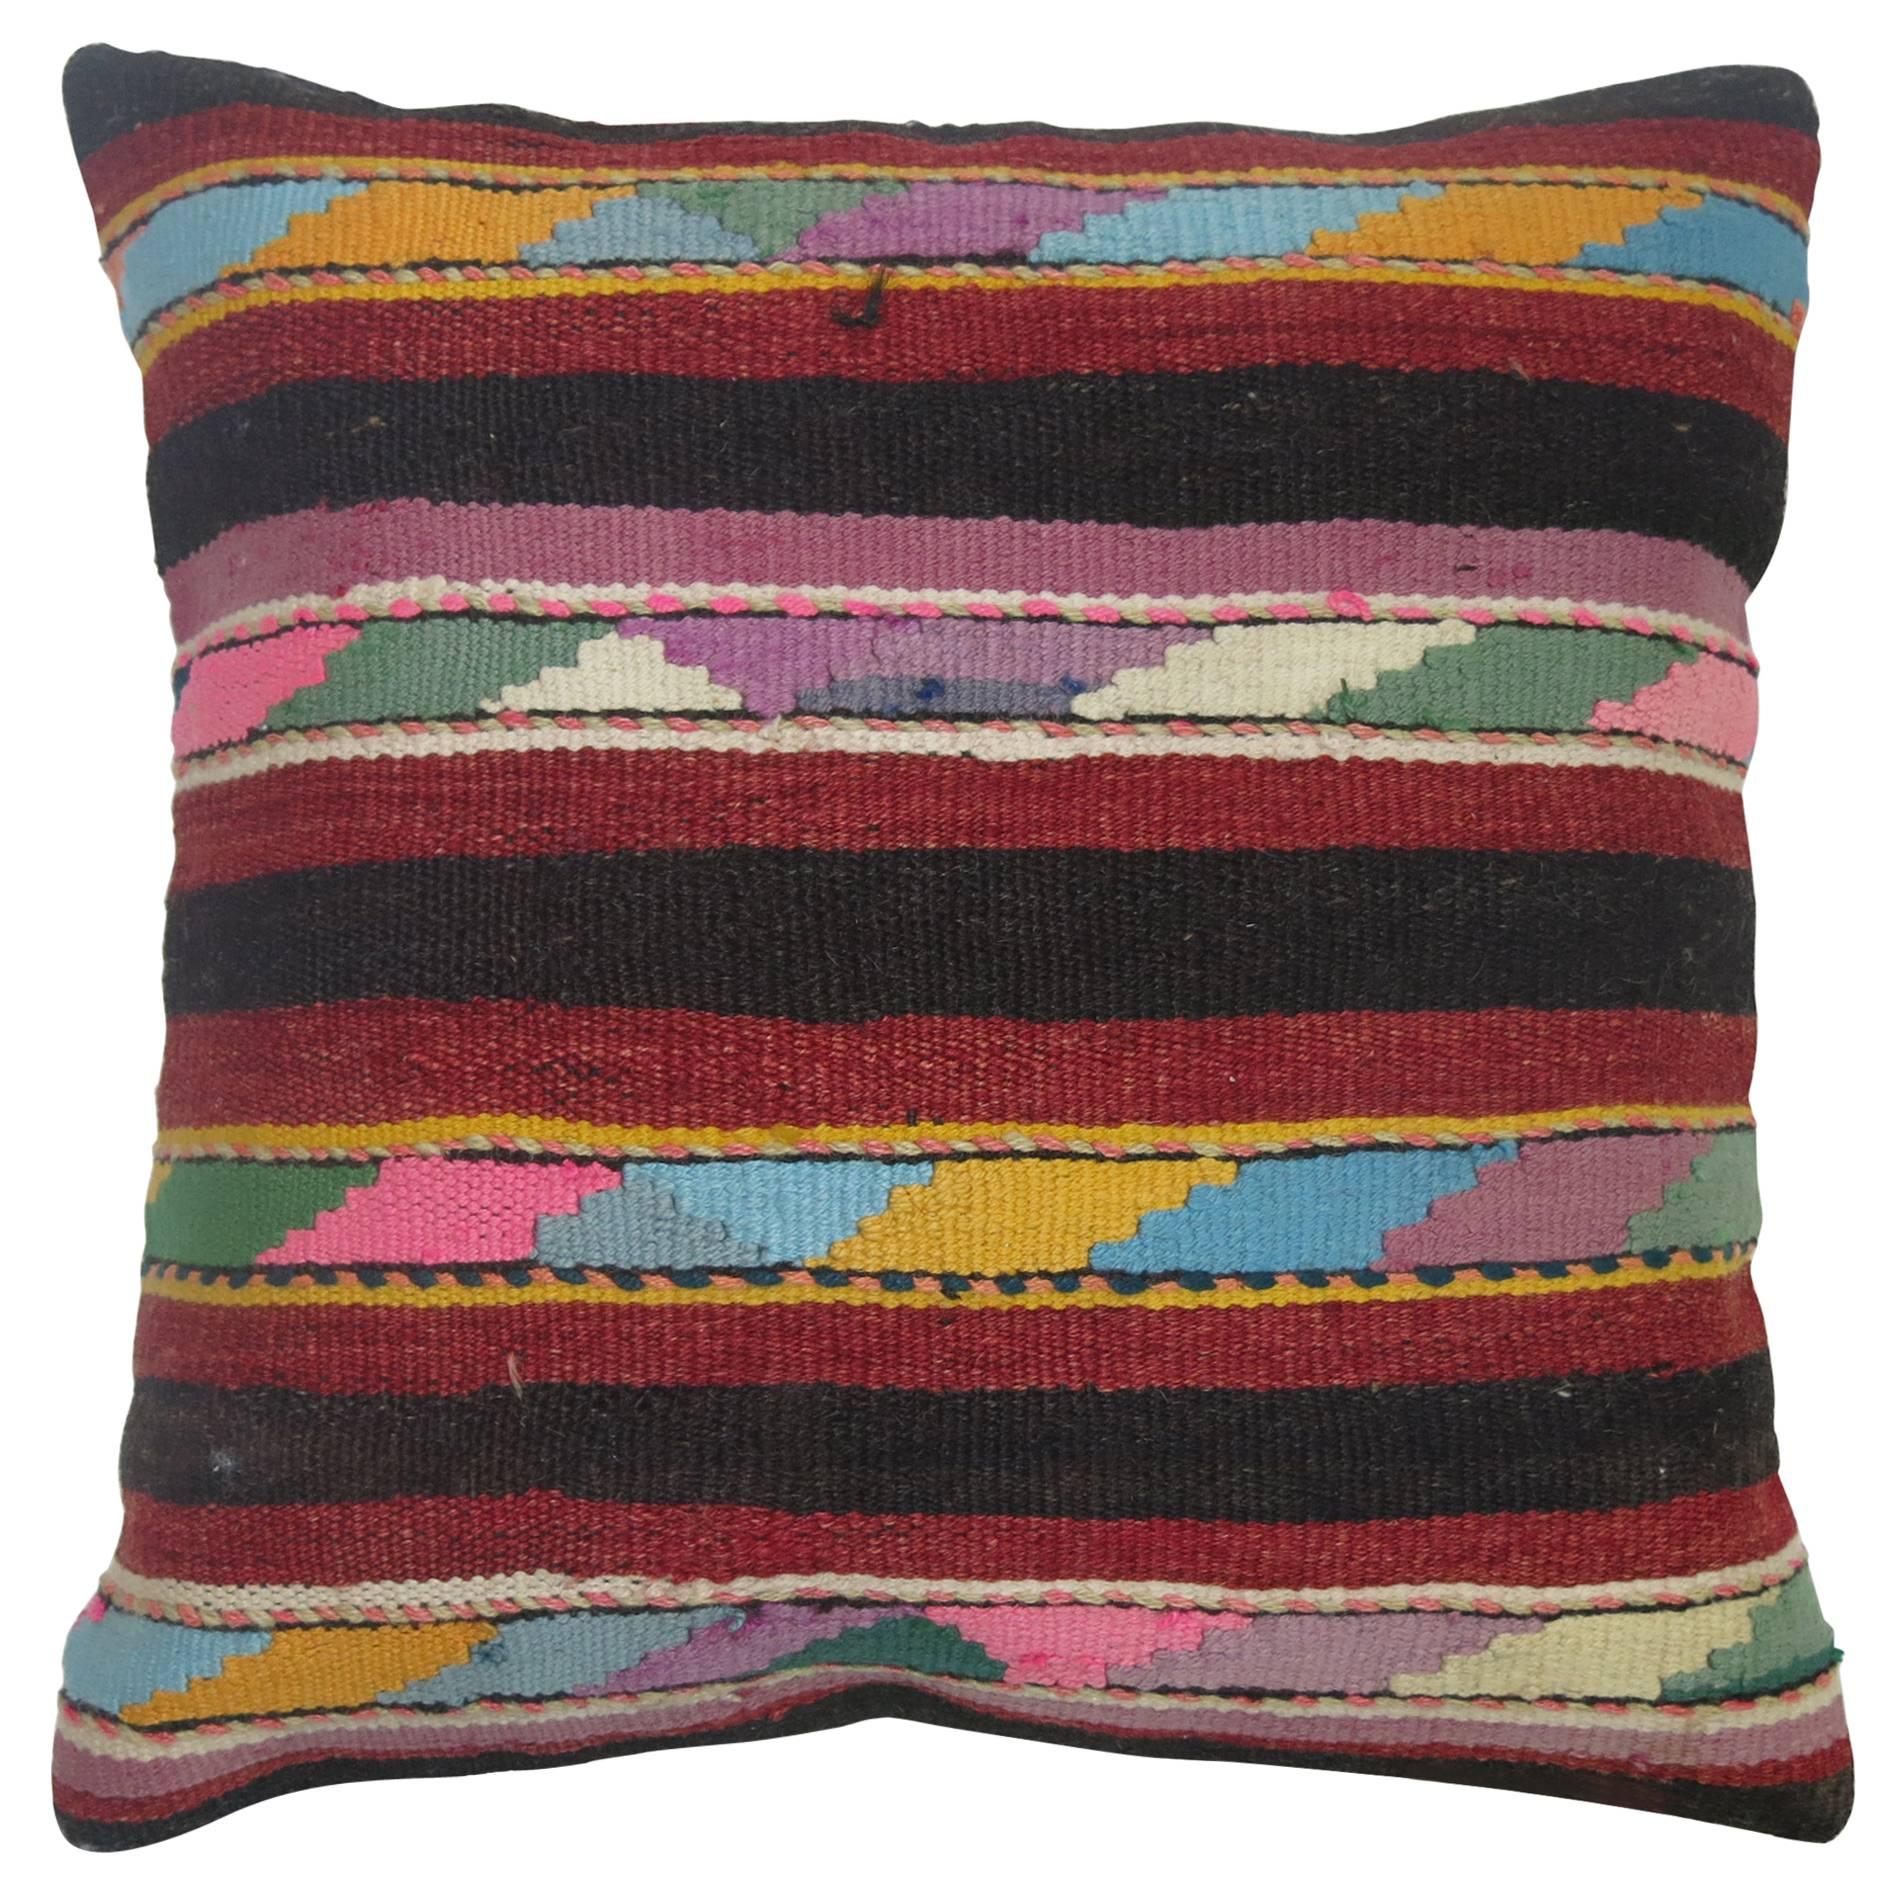 Colorful Kilim Pillow